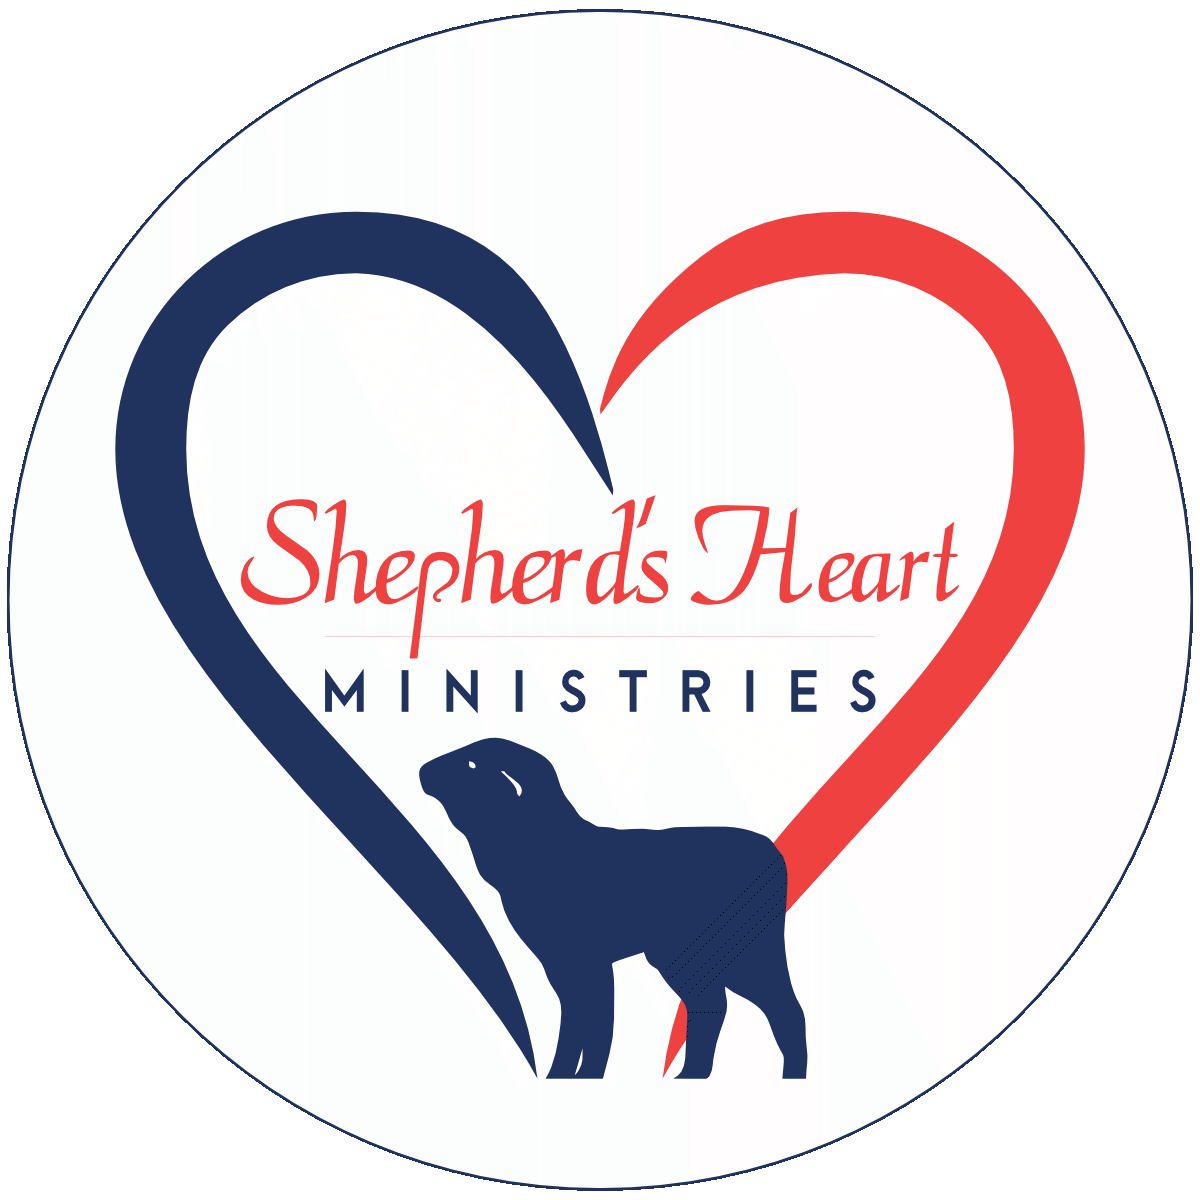 Shepherd's Heart Ministries logo